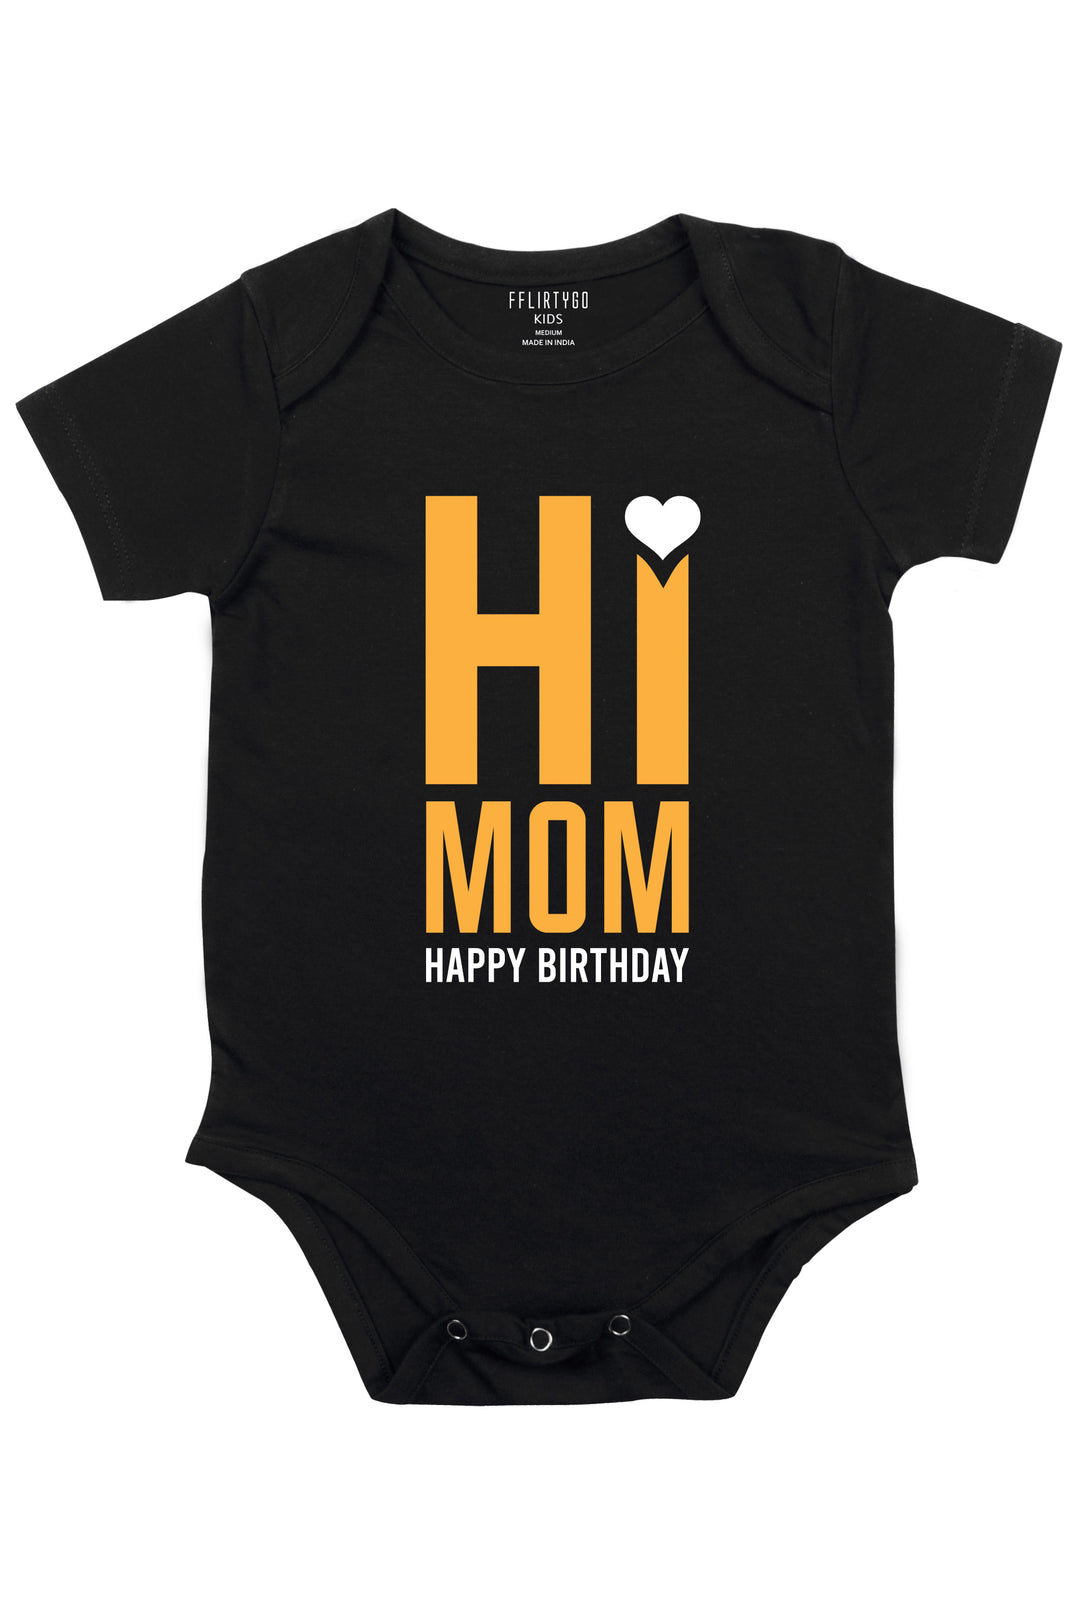 Hi Happy Birthday Mom Baby Romper | Onesies